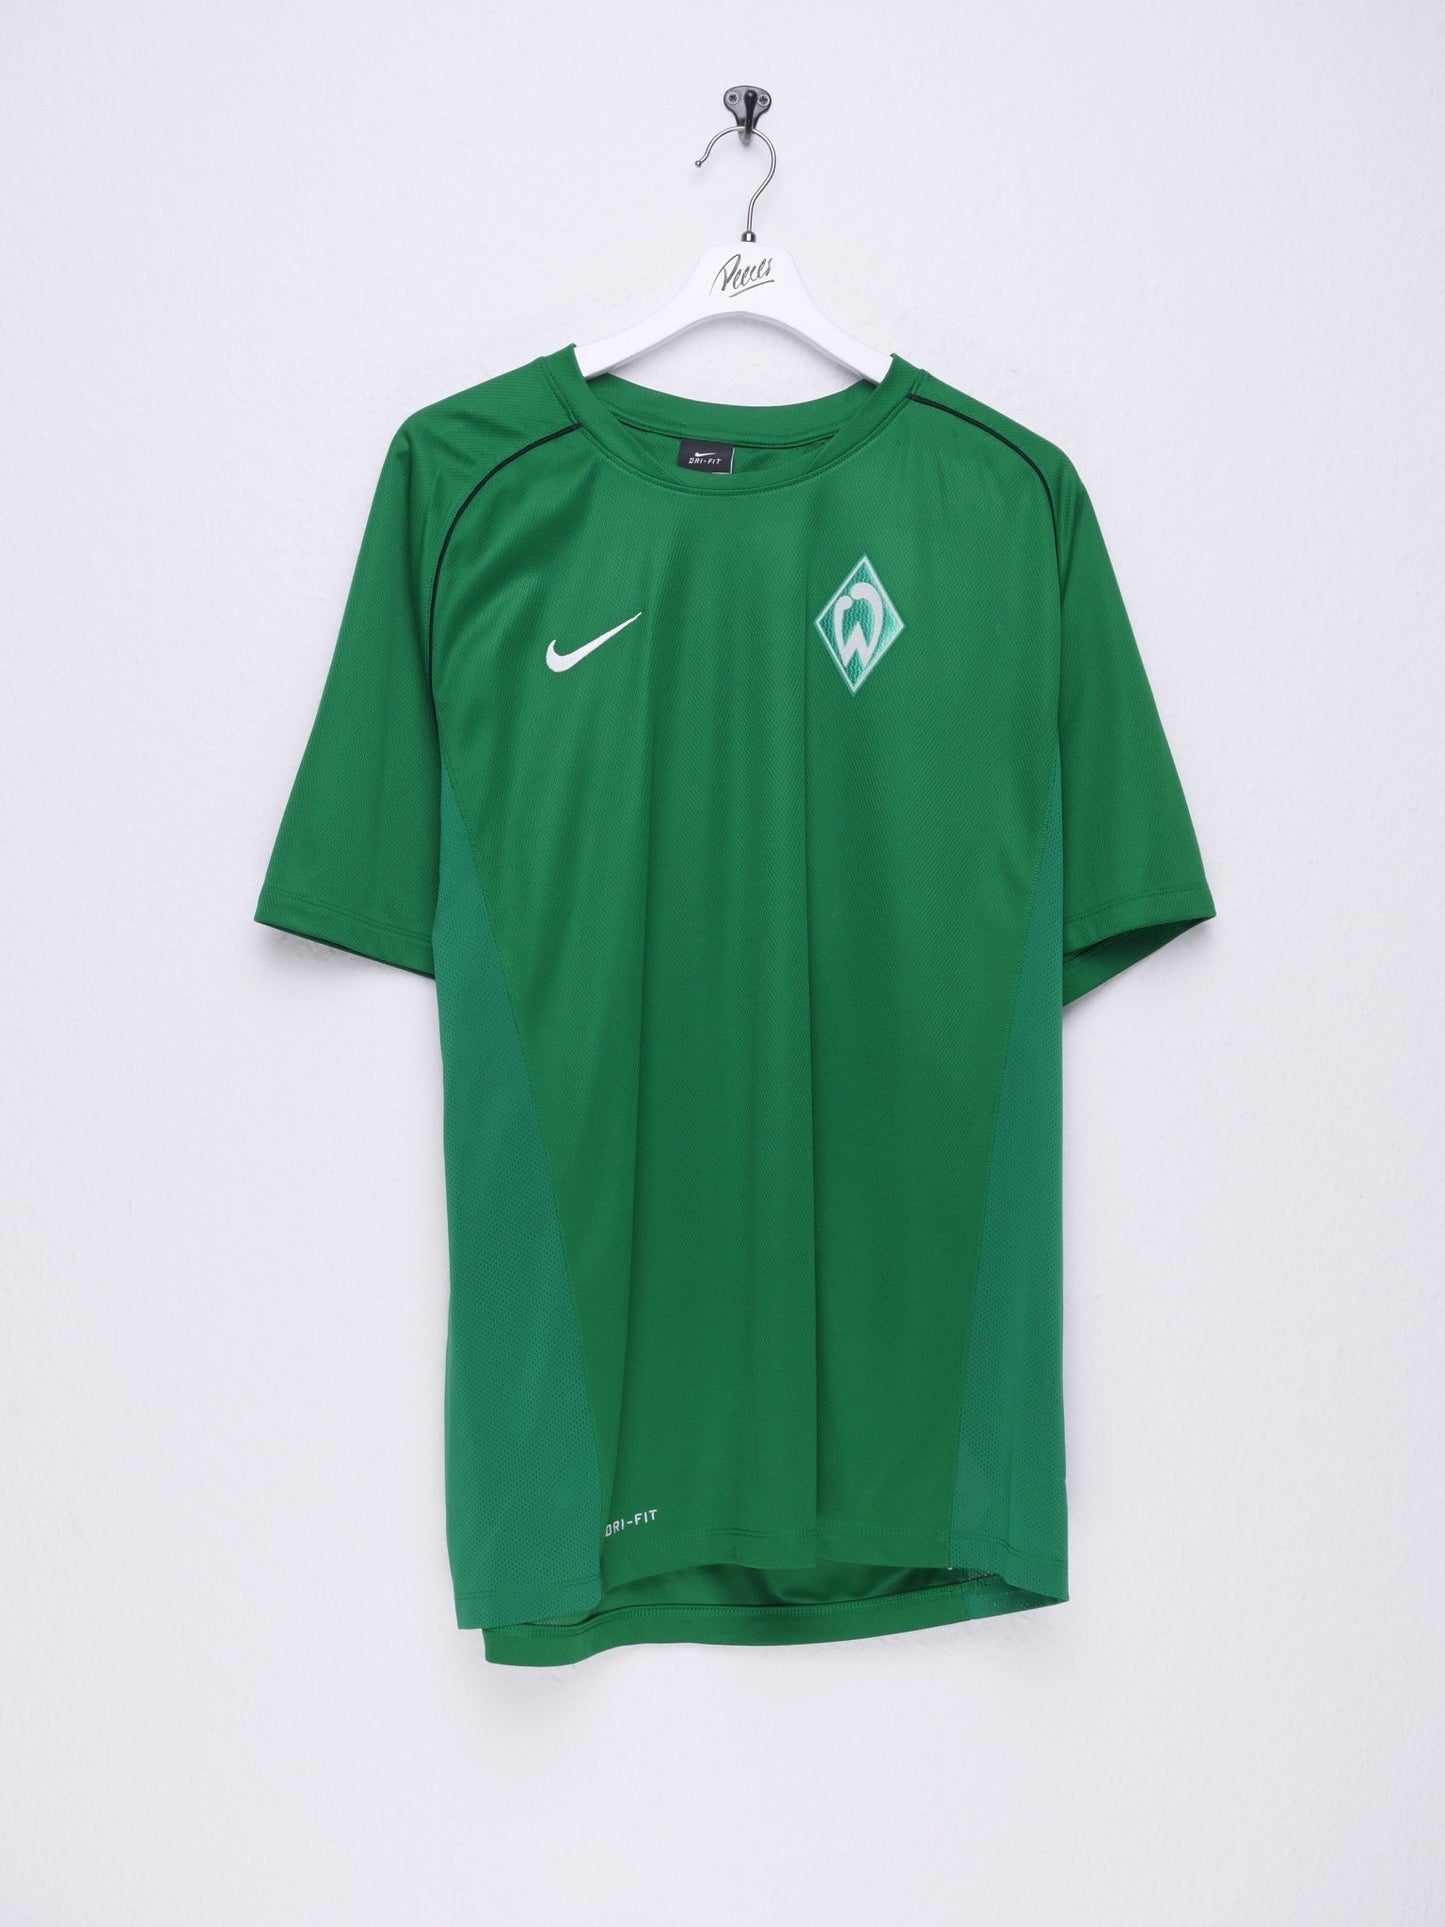 nike Werder Bremen embroidered Logo Soccer Jersey Shirt - Peeces